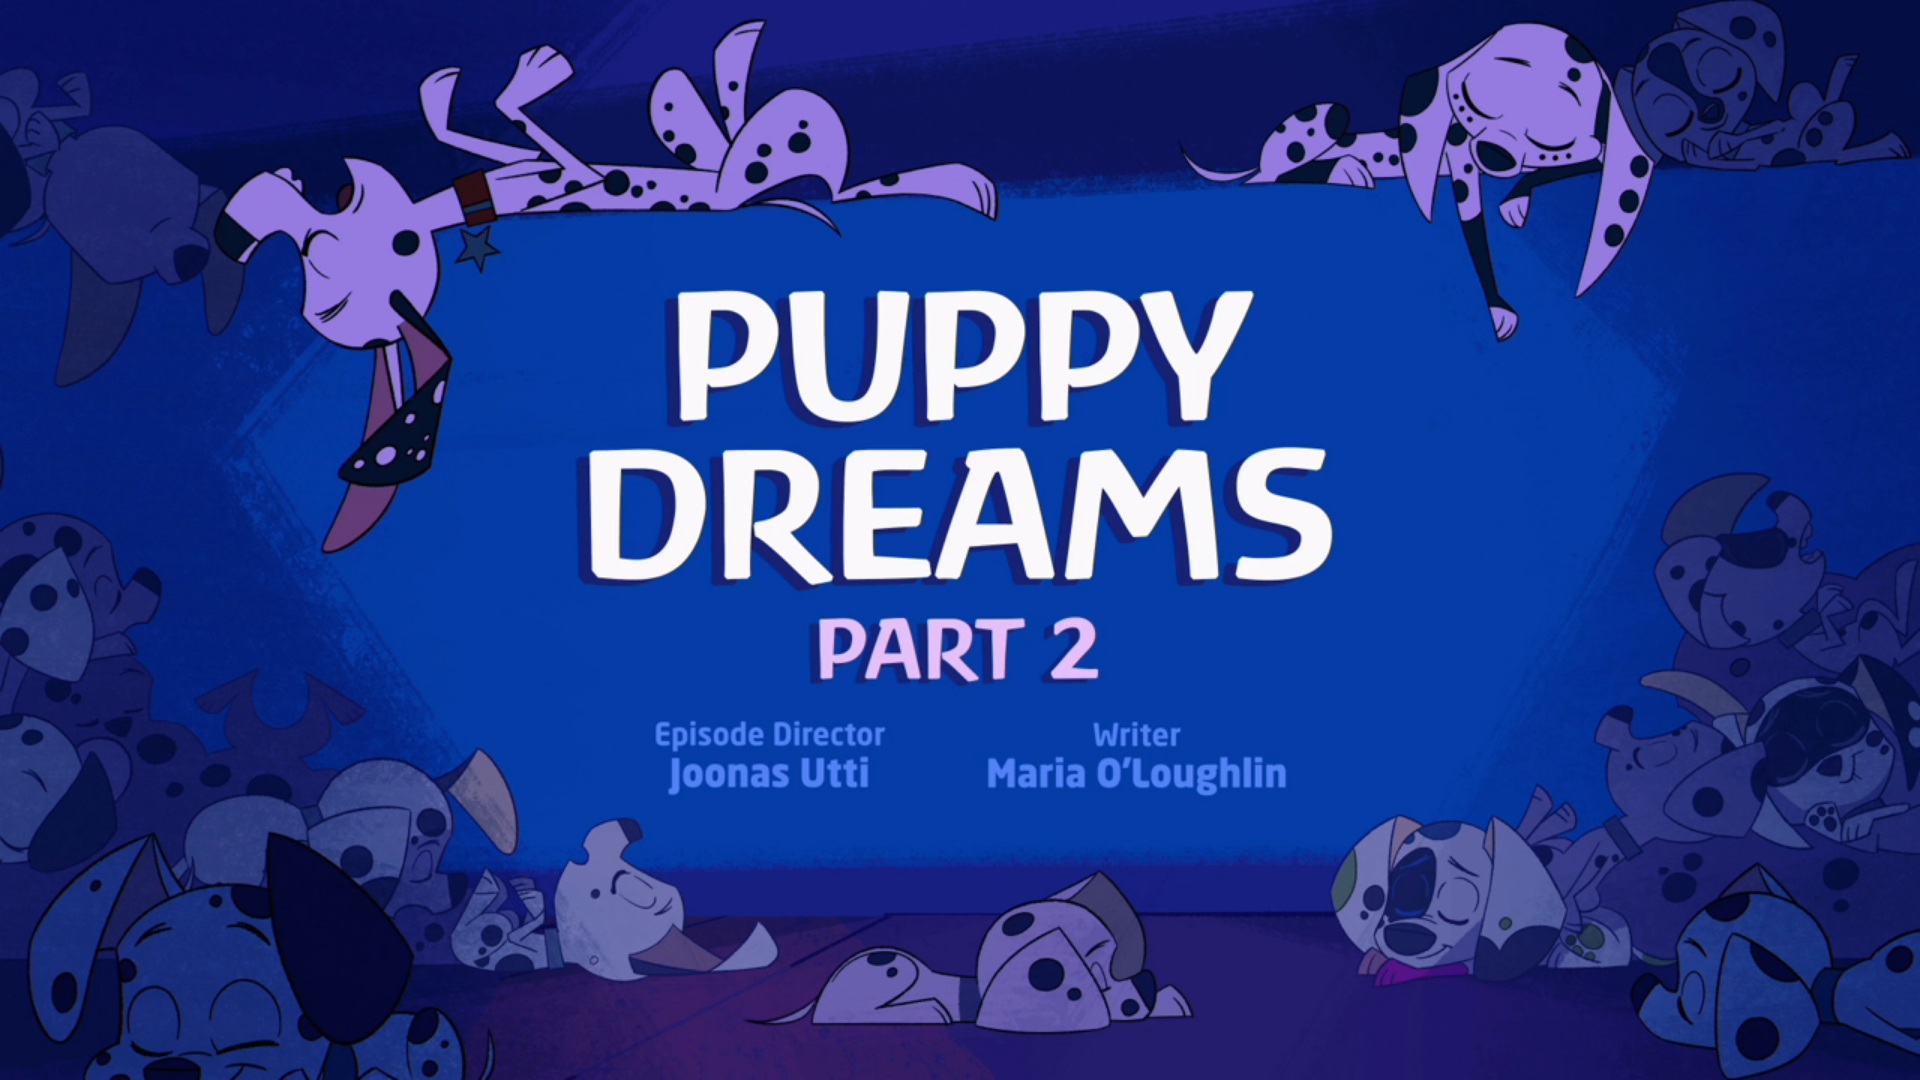 Puppy Dreams 101 Dalmatian Street Wiki Fandom